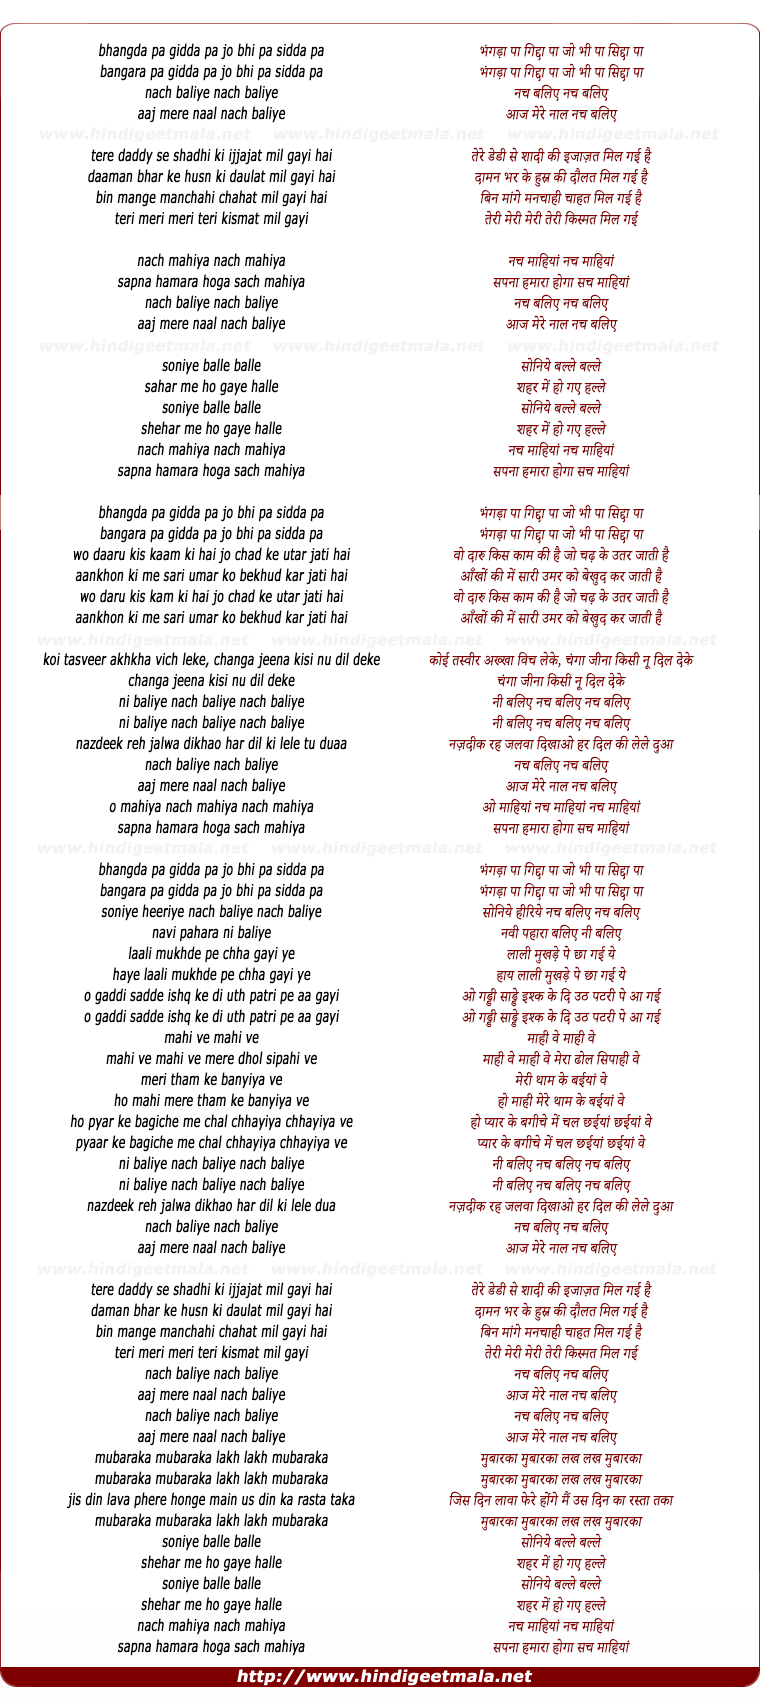 lyrics of song Nach Baliye Aaj Mere Naal Nach Baliye